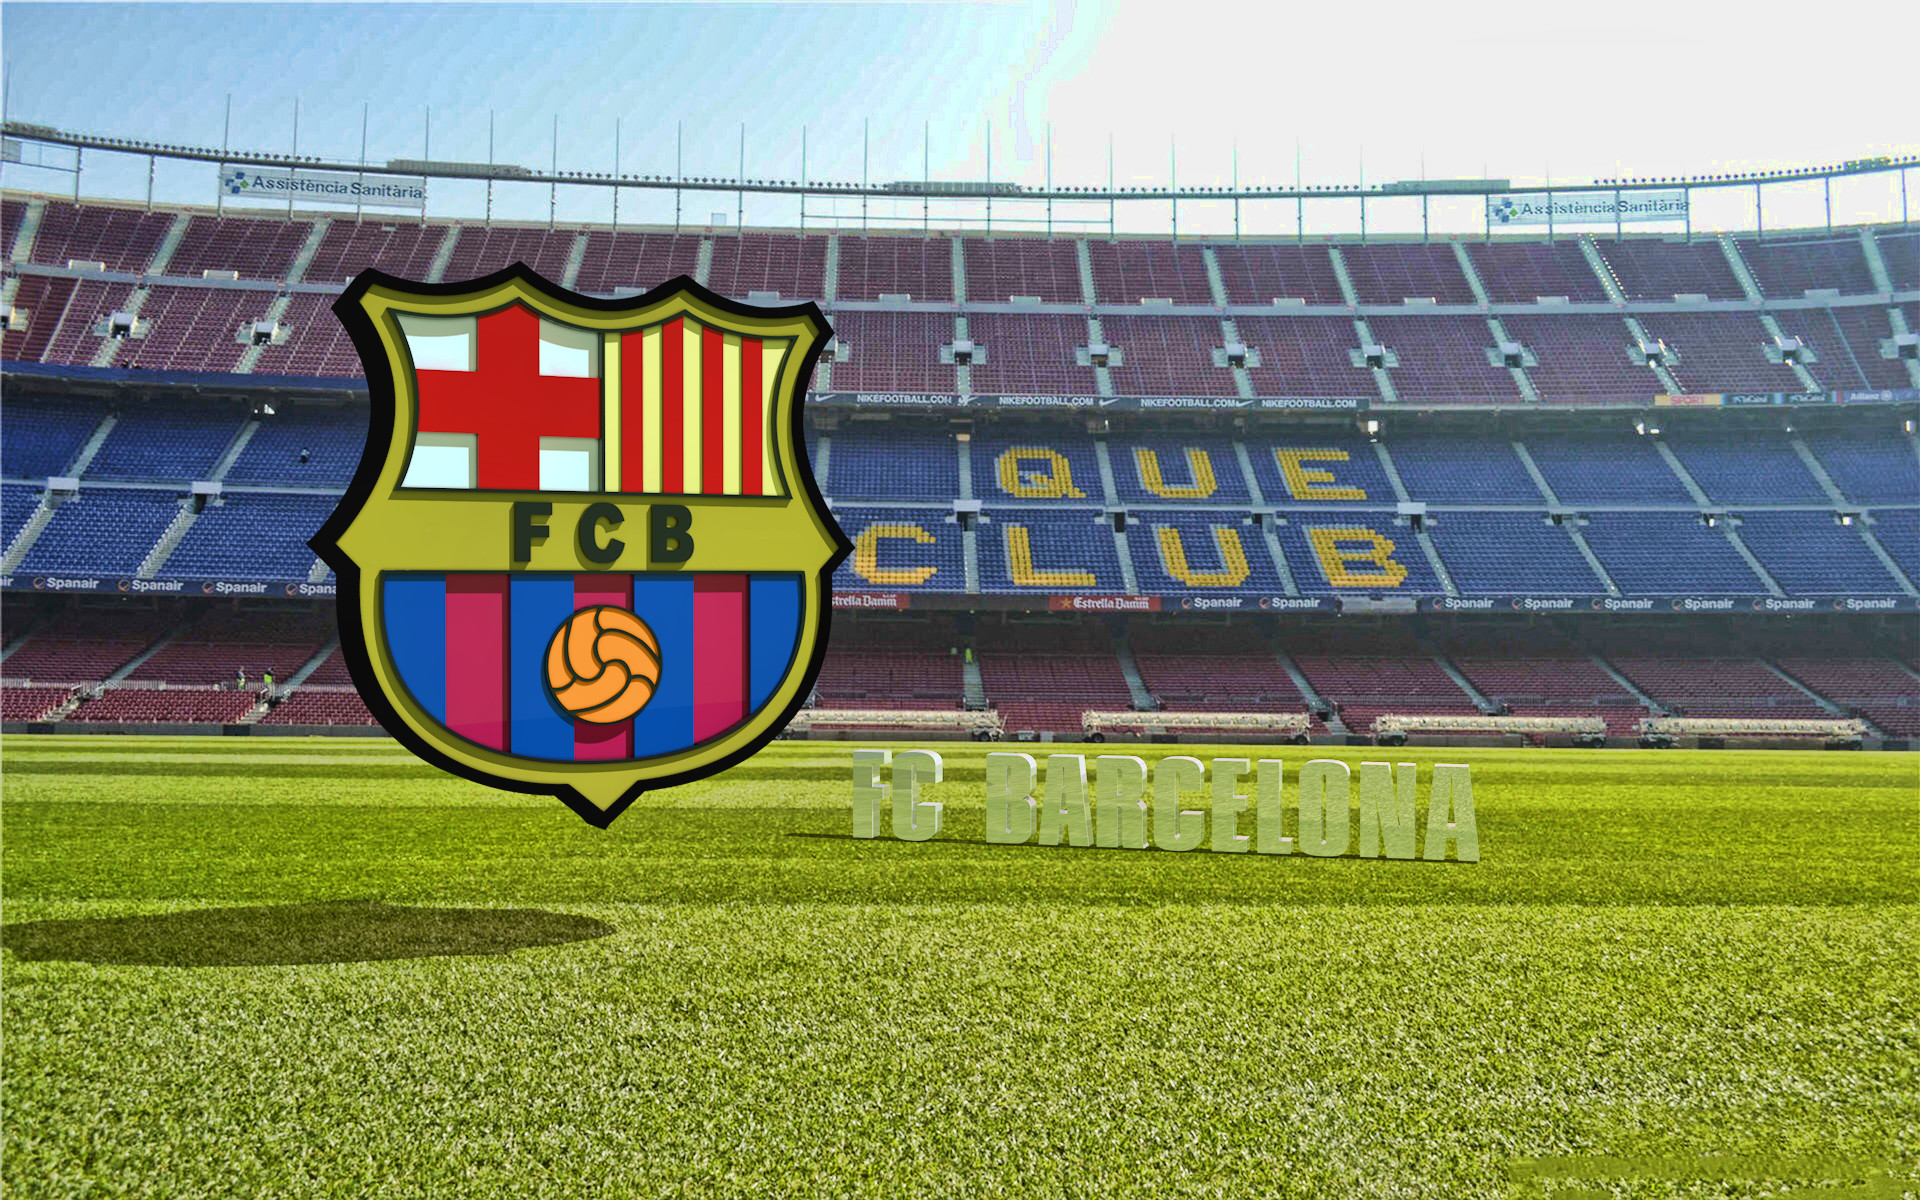 Stadion barsa uz. Логотип Барселона стадион. Камп ноу. Камп ноу с эмблемой Барселоны. Эмблема ФК Барселона в высоком качестве Камп ноу.